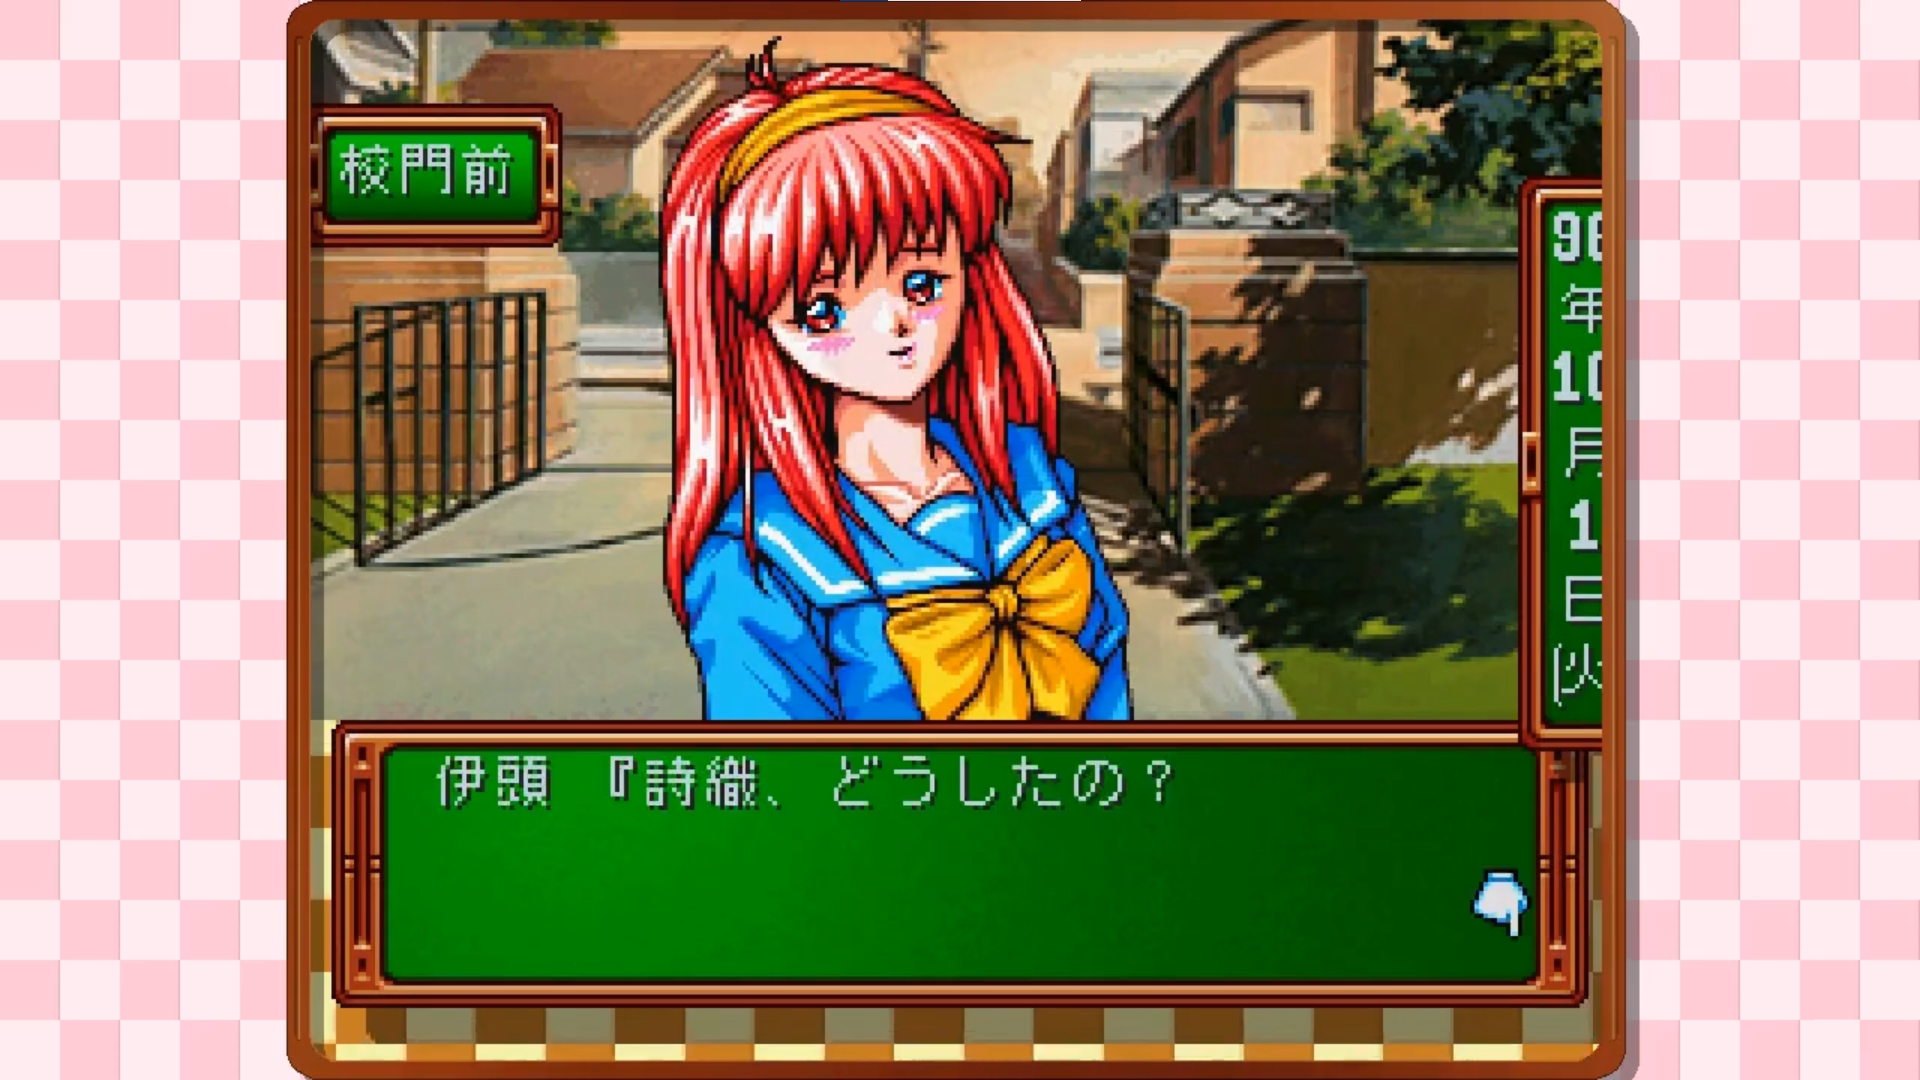 A screenshot from the visual novel Tokimeki Memorial